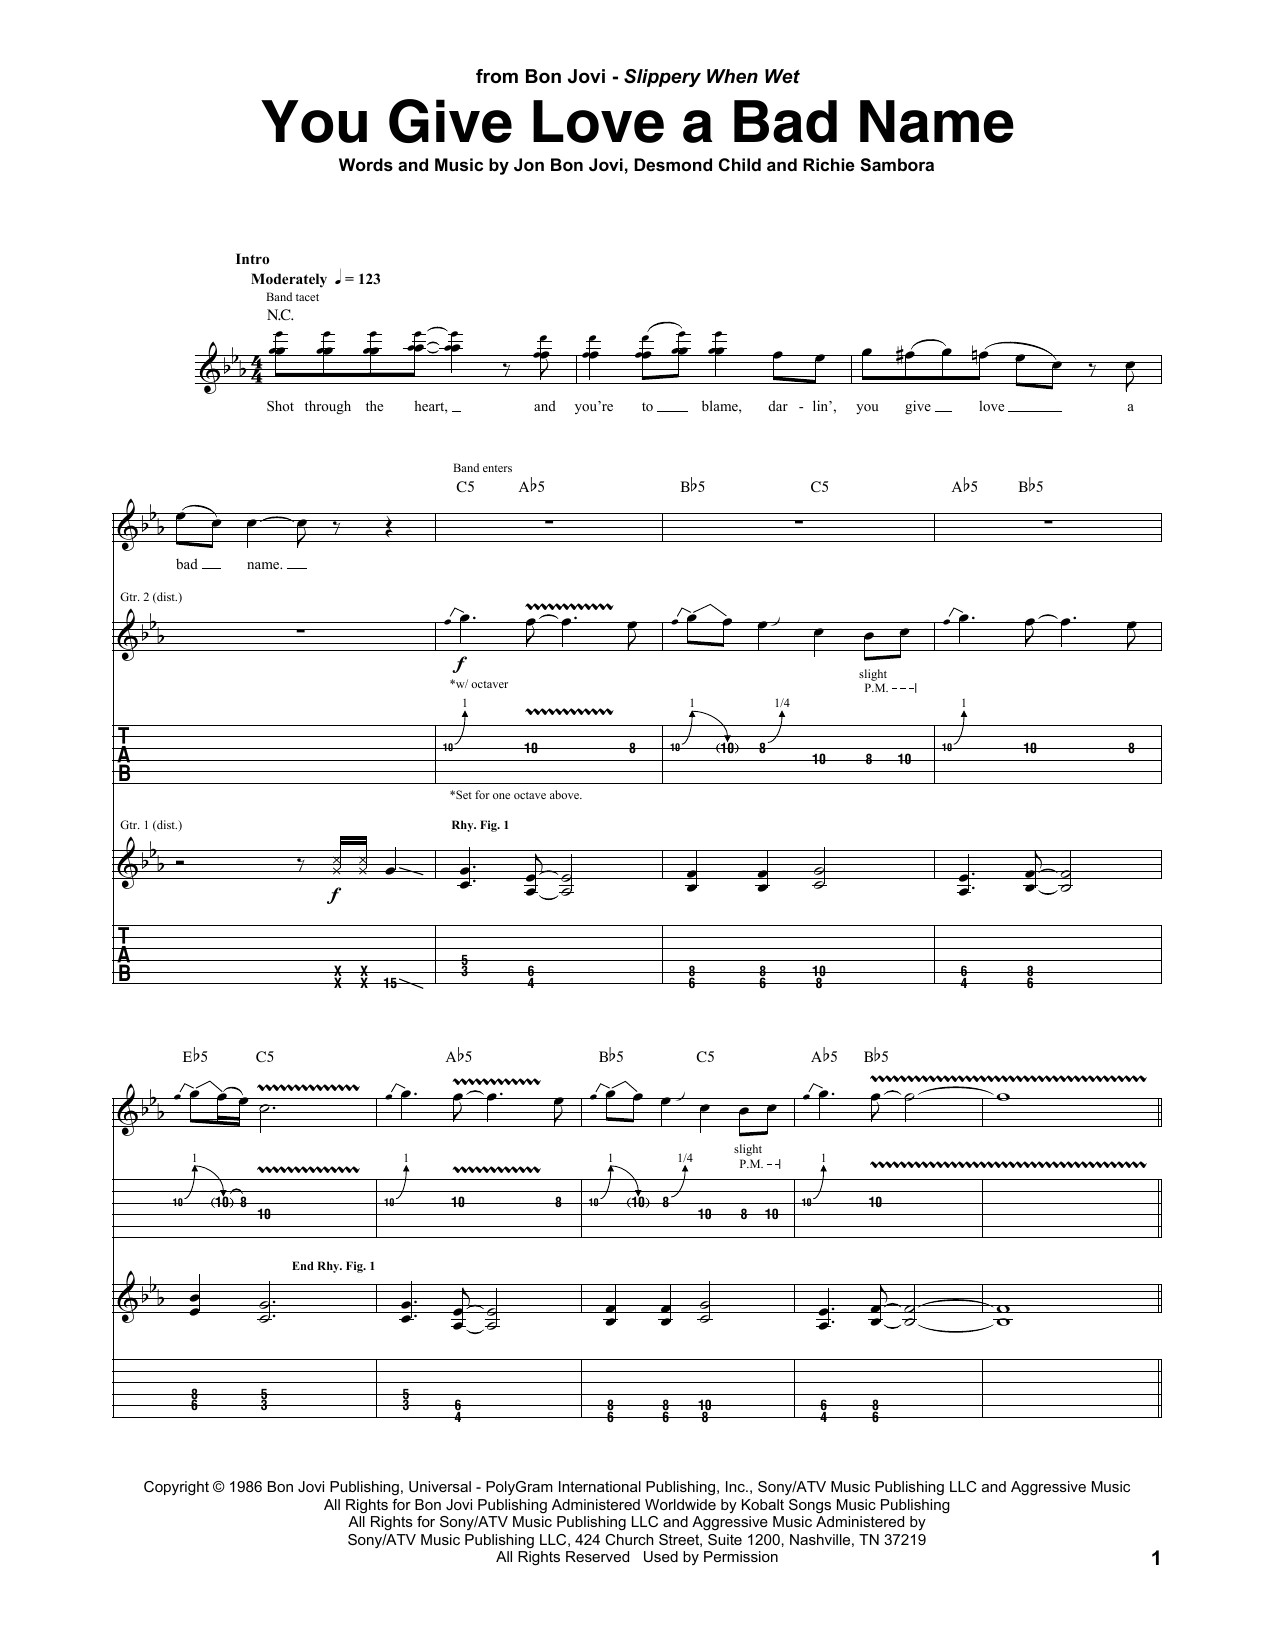 Bon Jovi You Give Love A Bad Name Sheet Music Notes & Chords for Real Book – Melody, Lyrics & Chords - Download or Print PDF